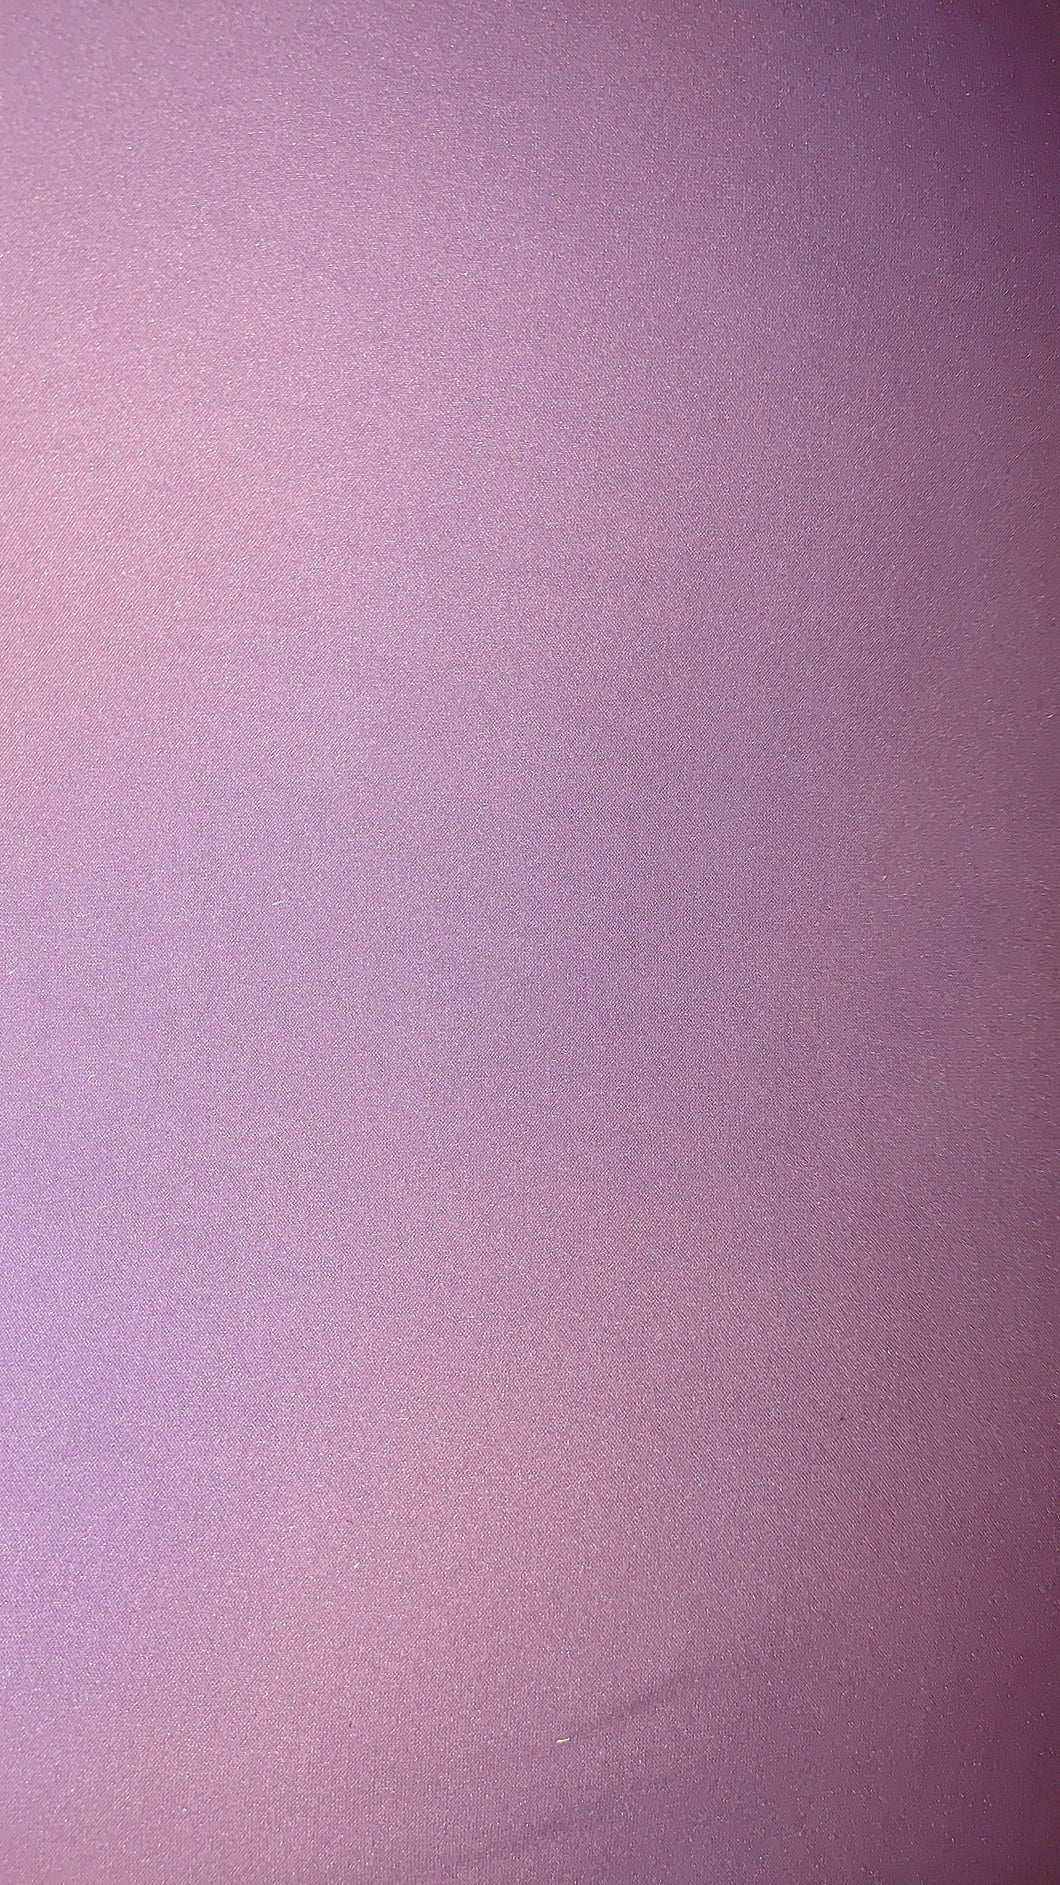 Solid purple